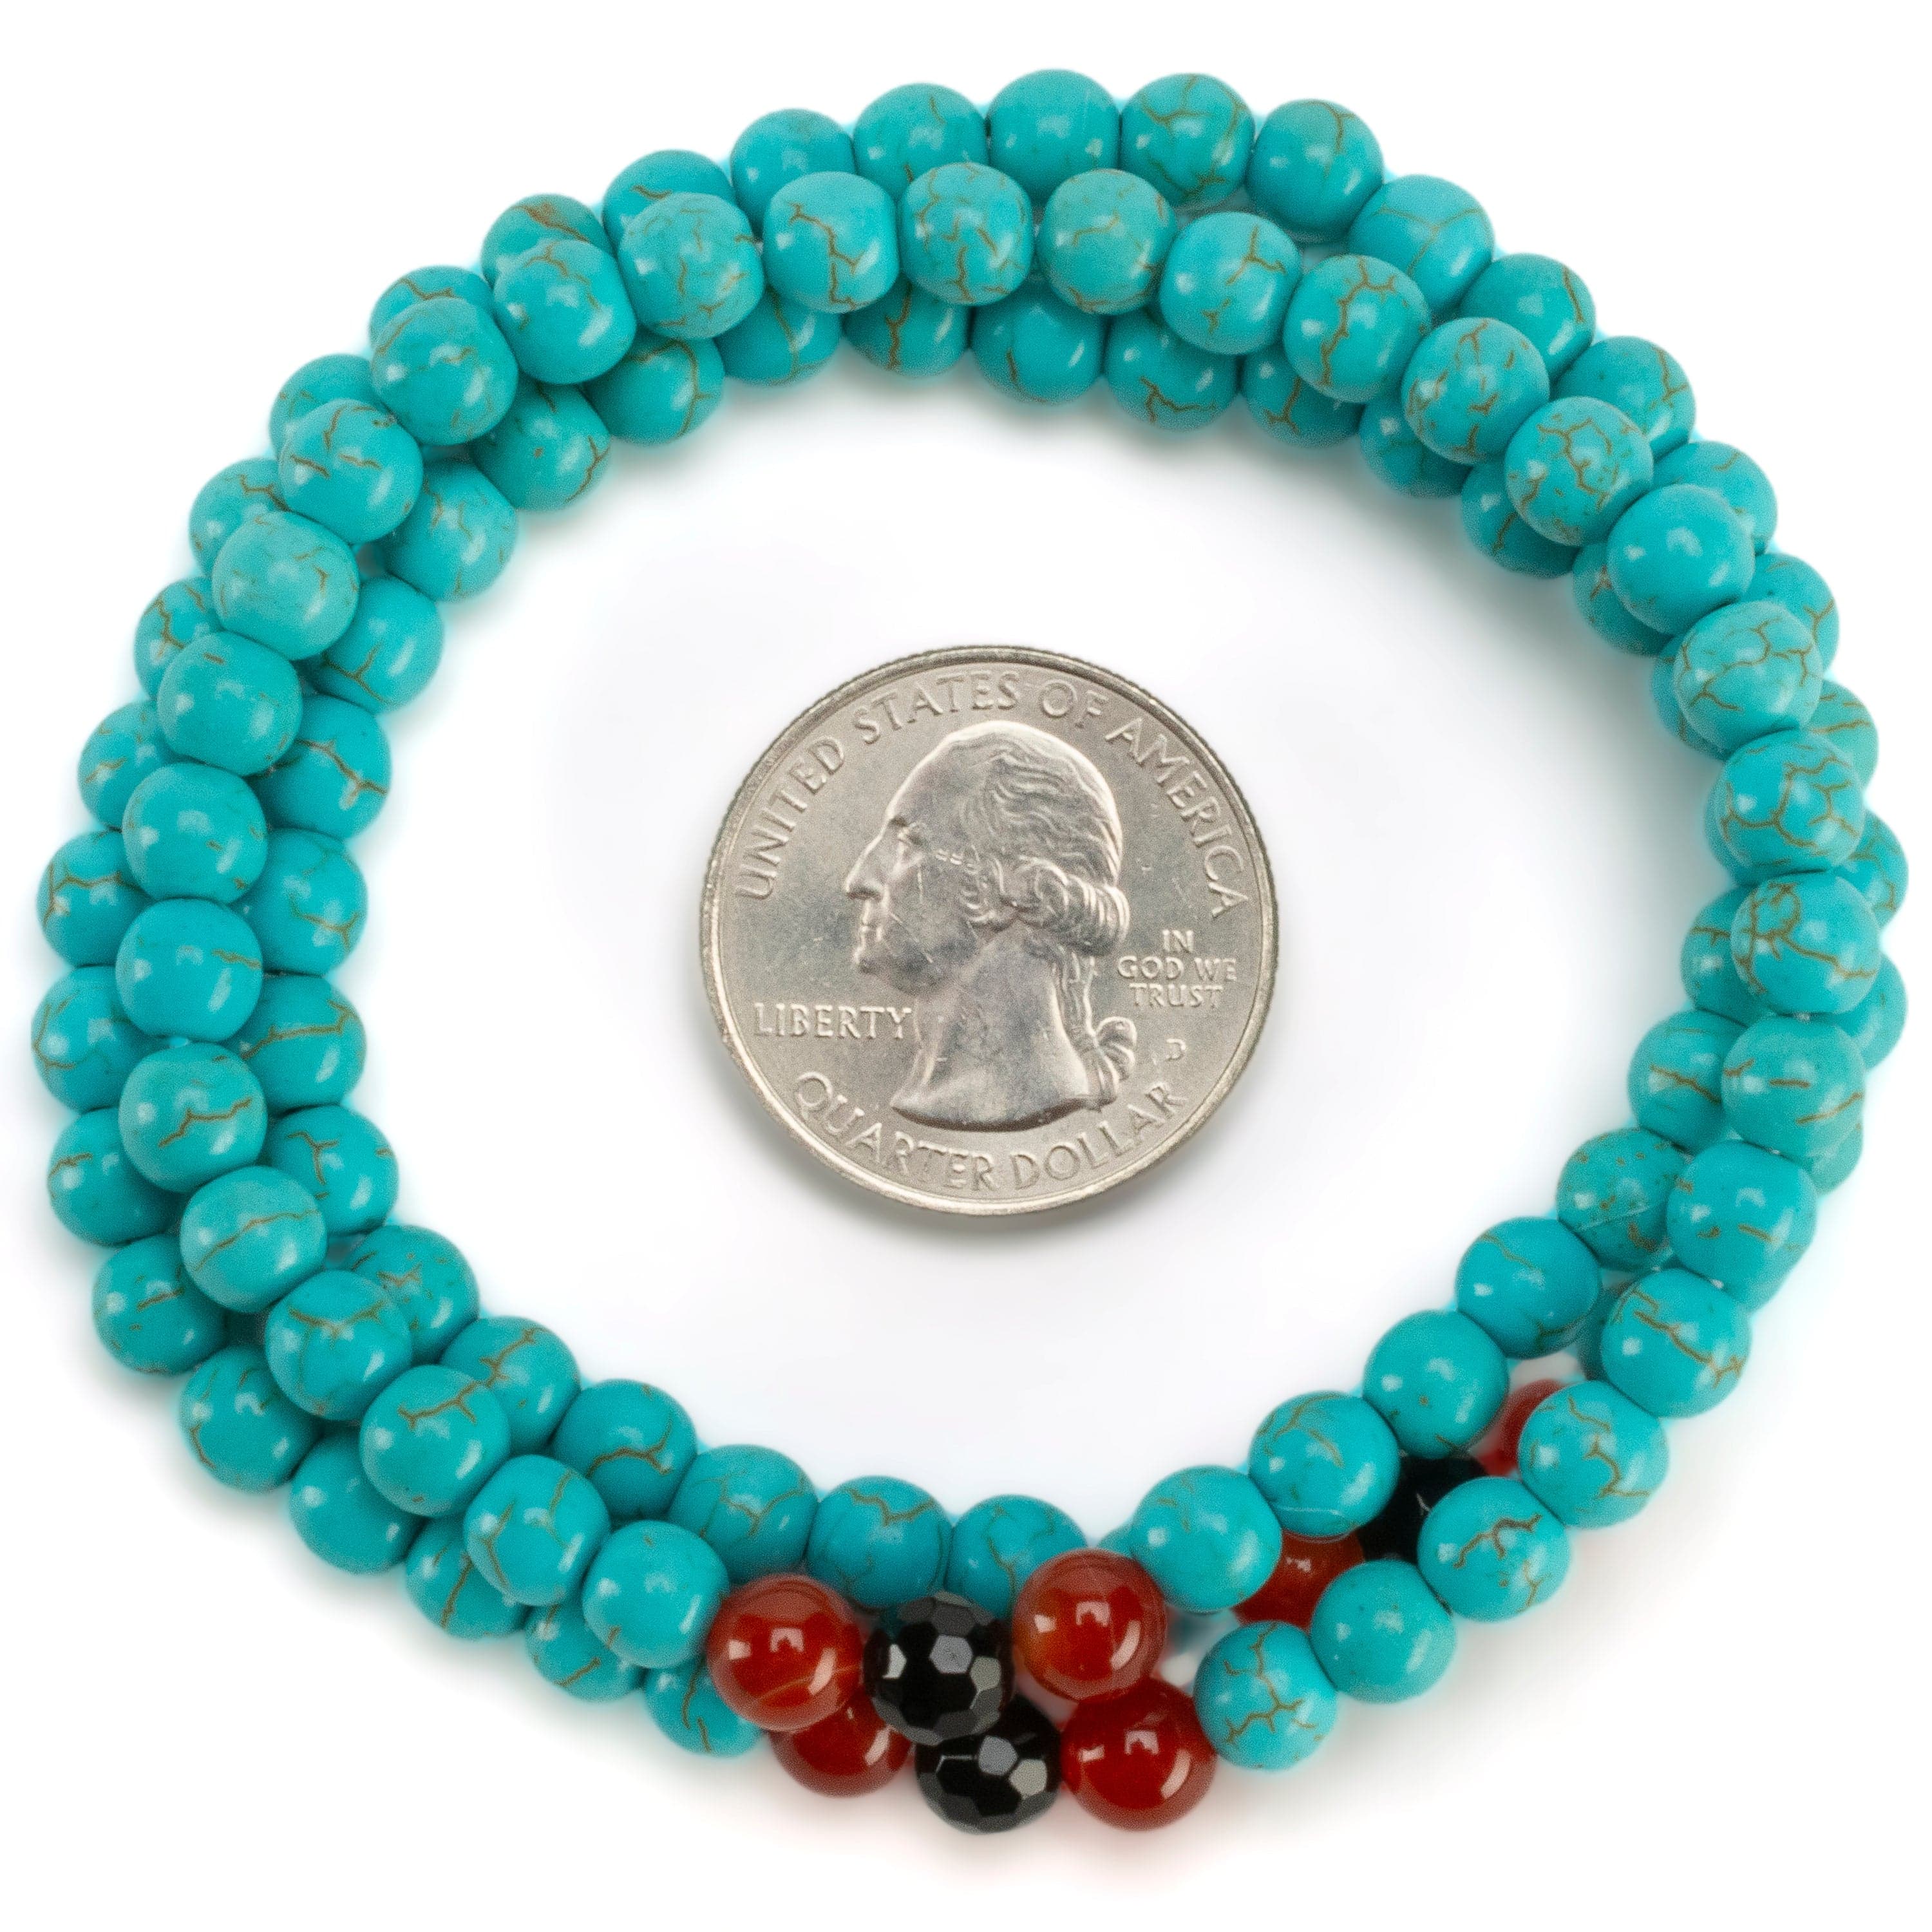 Kalifano Gemstone Bracelets Howlite Turquoise 6mm Beads with Black Agate & Carnelian Accent Beads Triple Wrap Gemstone Elastic Bracelet WHITE-BGI3-081